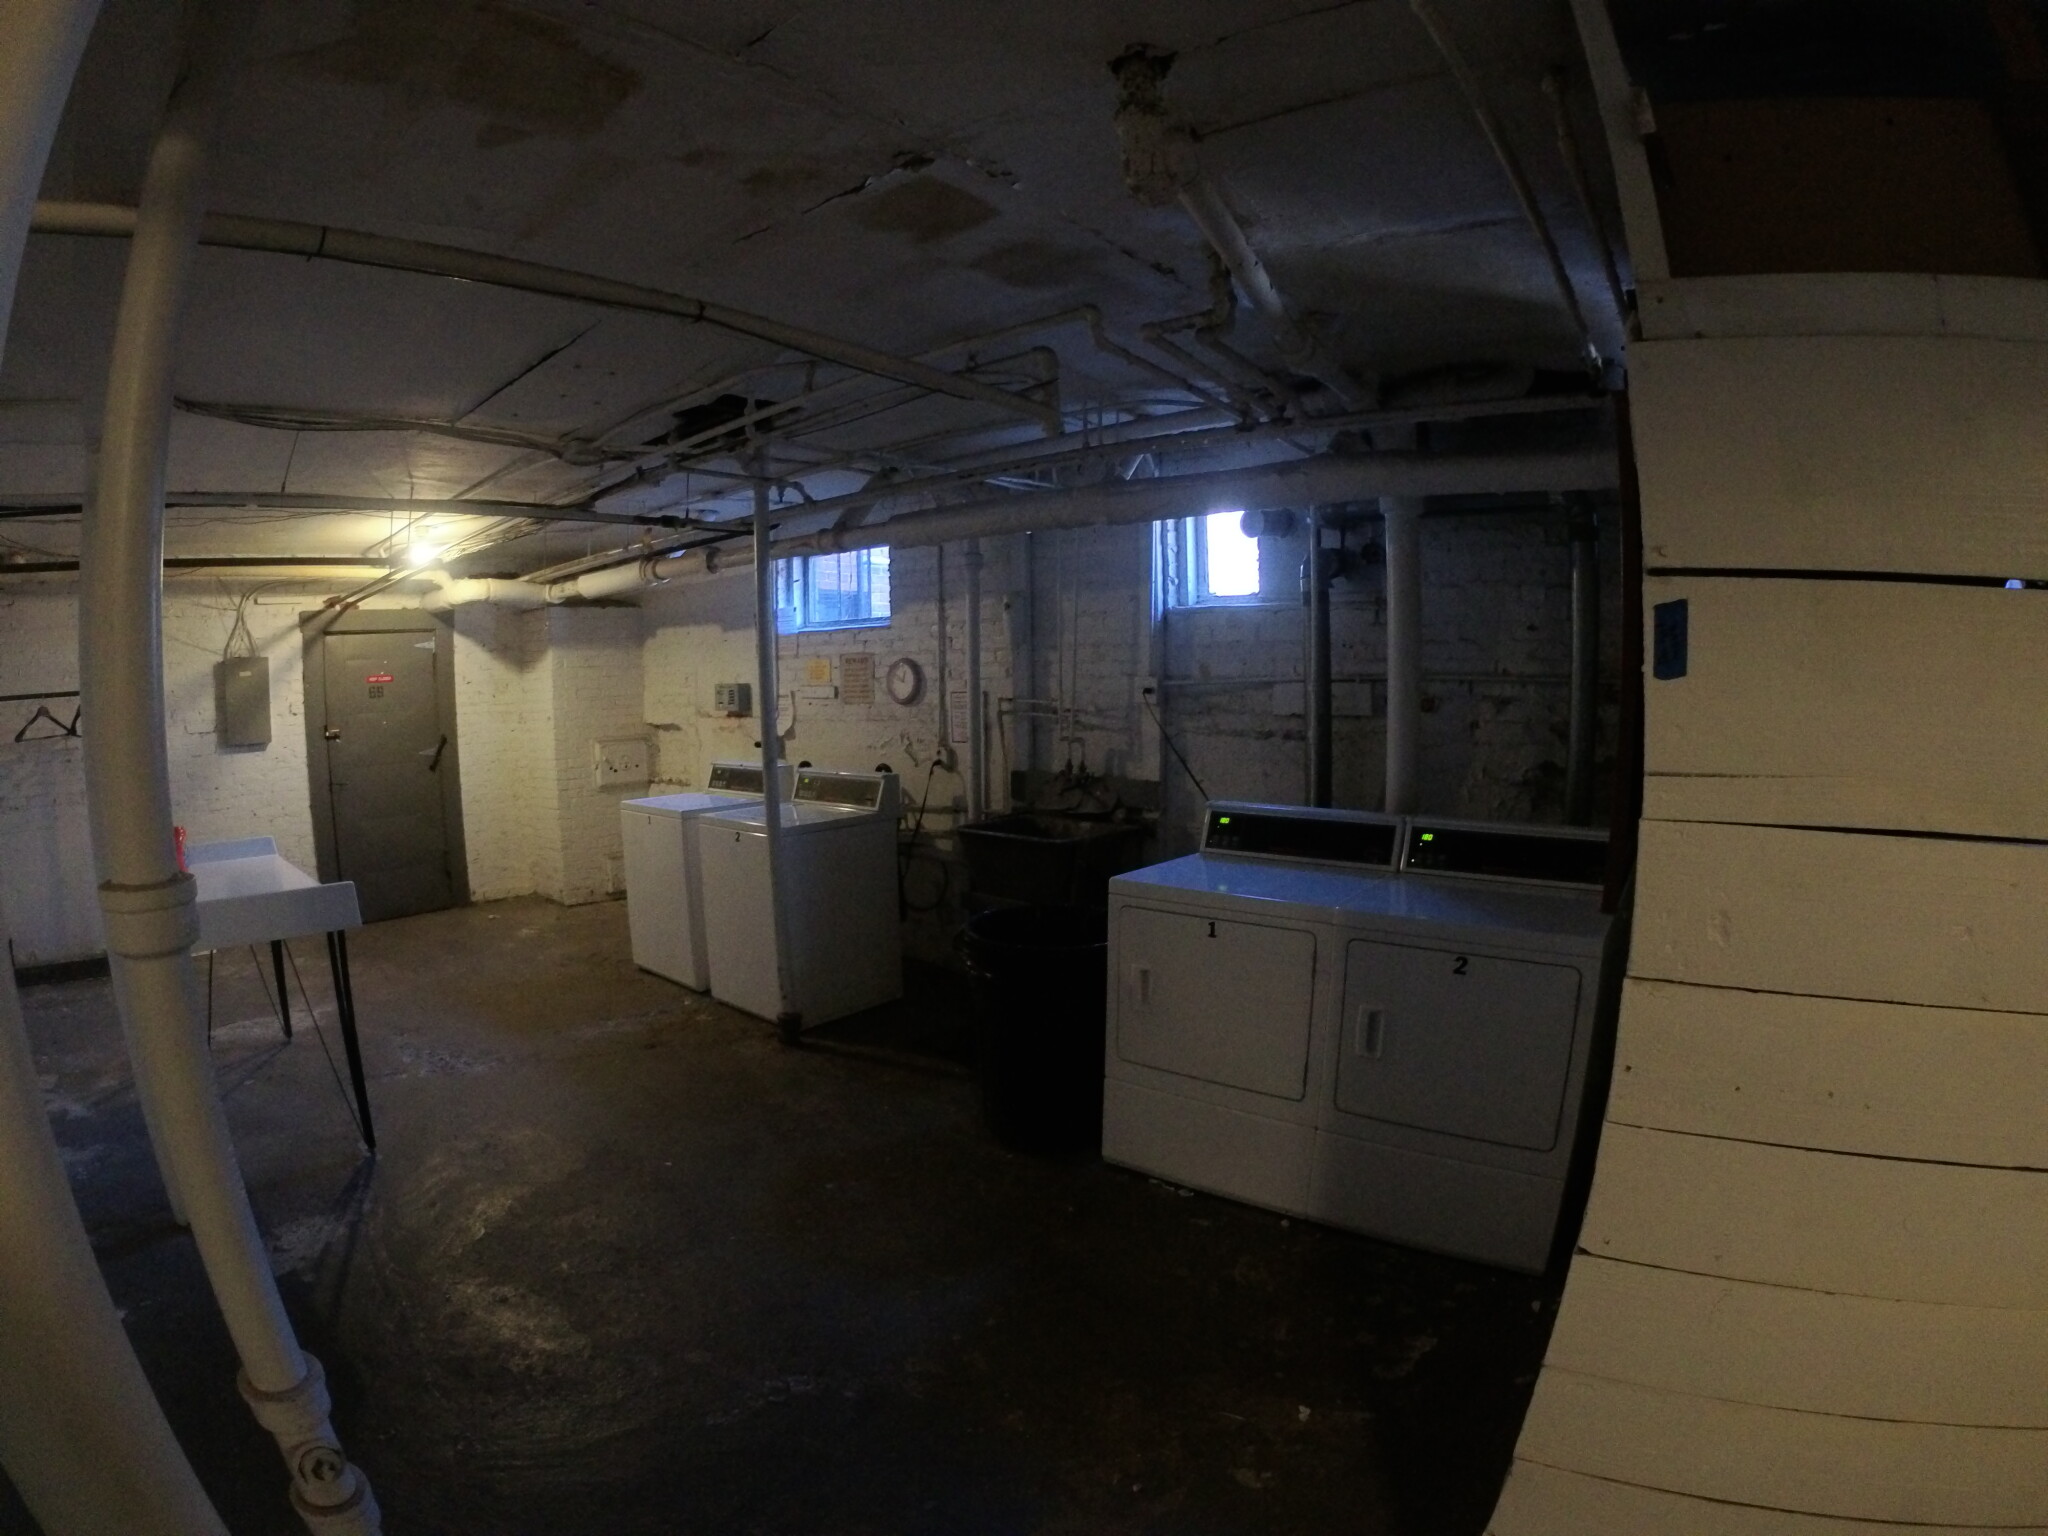 Photos of apartment on Park St.,Brookline MA 02446